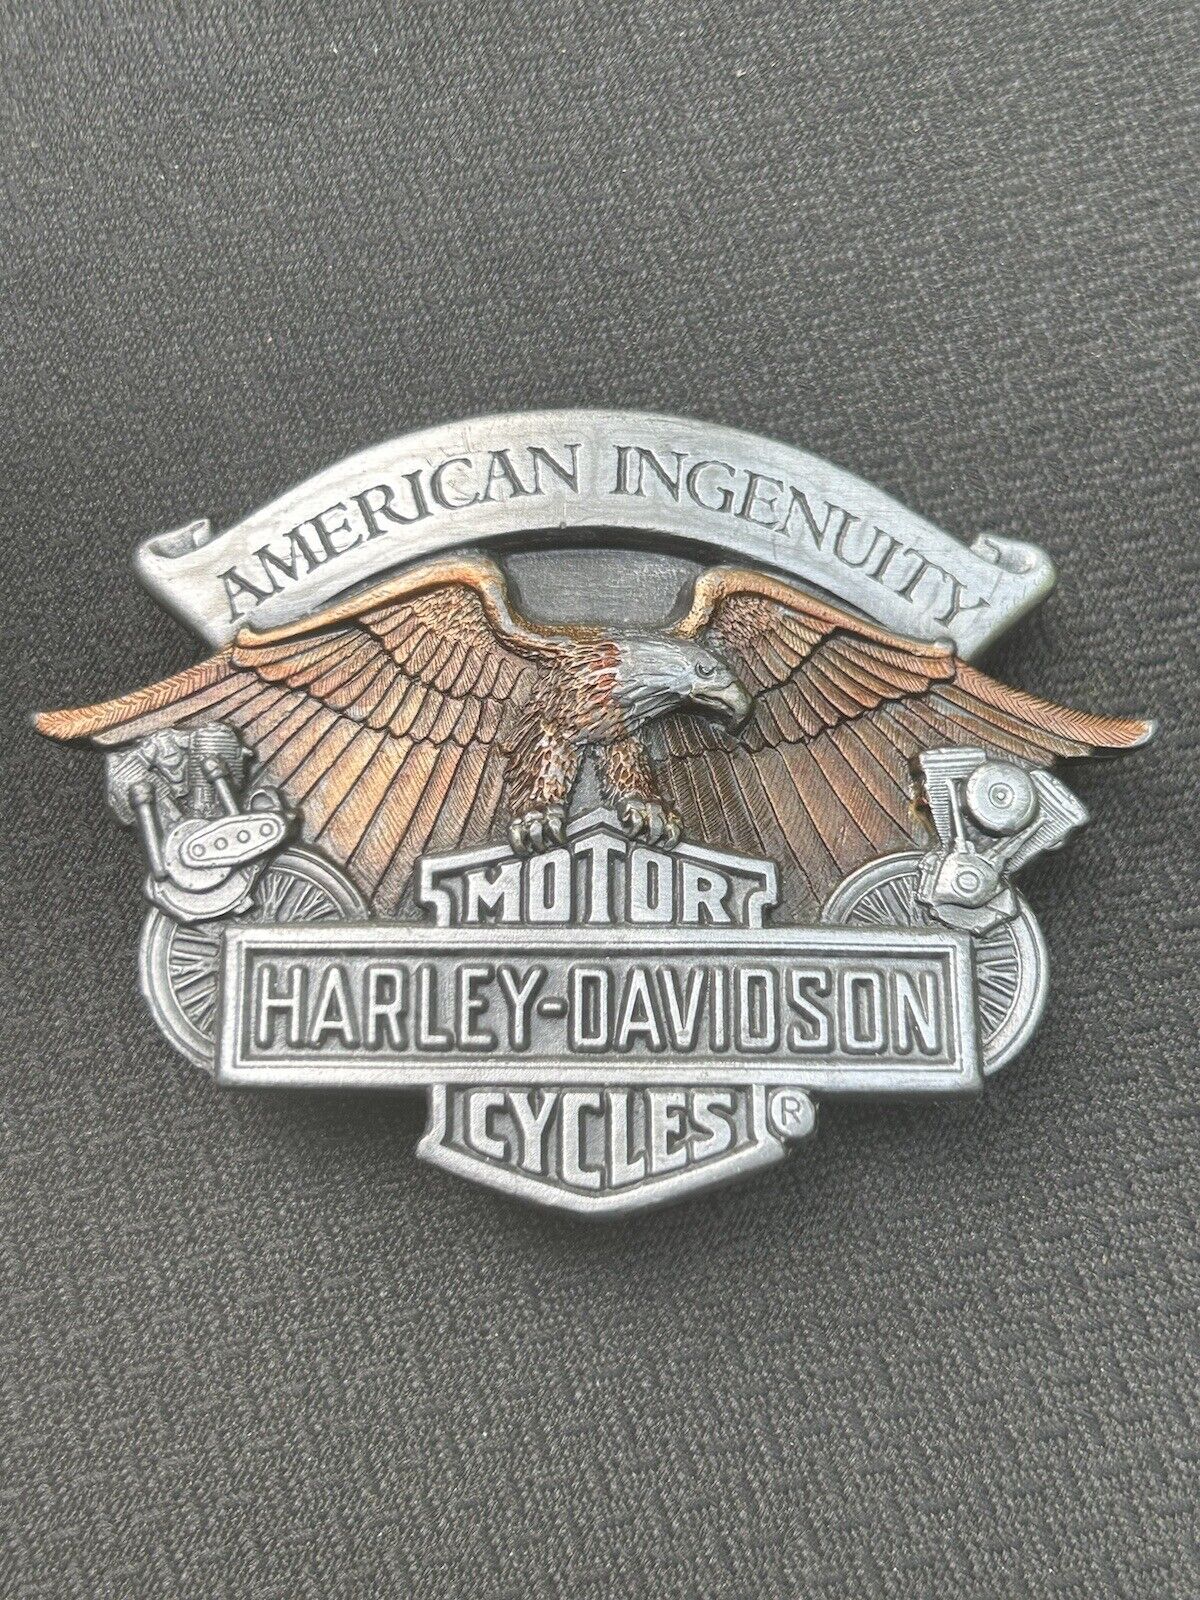 Vintage Harley Davidson Belt Buckle American Ingenuity Pewter 1995